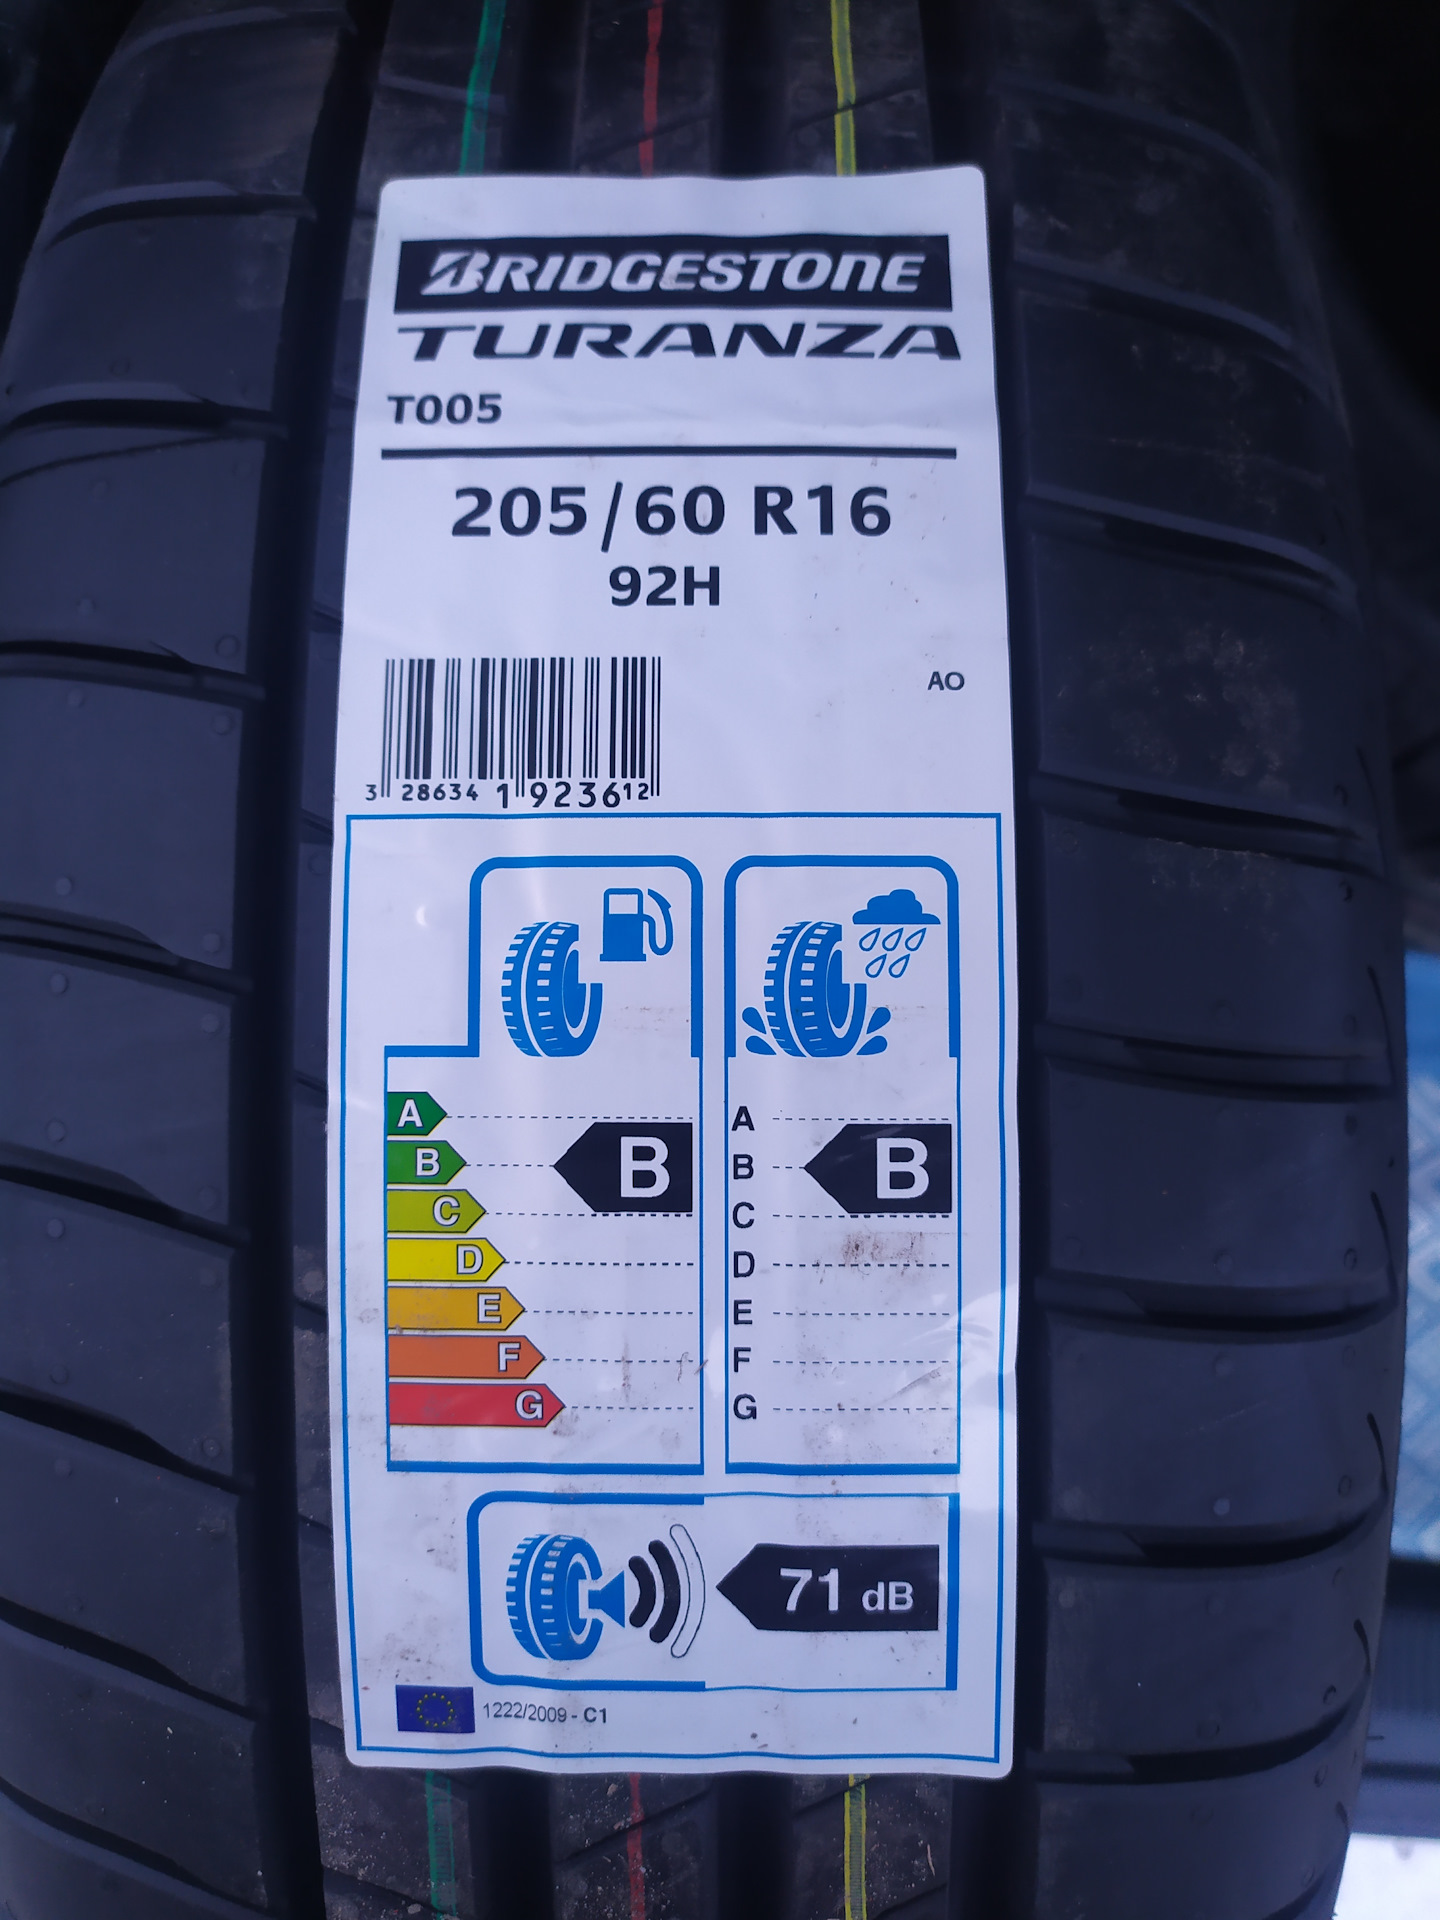 Bridgestone turanza t005 215 60 r16. Шины IКОN Tyres 205 60 16. 215/60 R16 лето Turanza на шкоде.